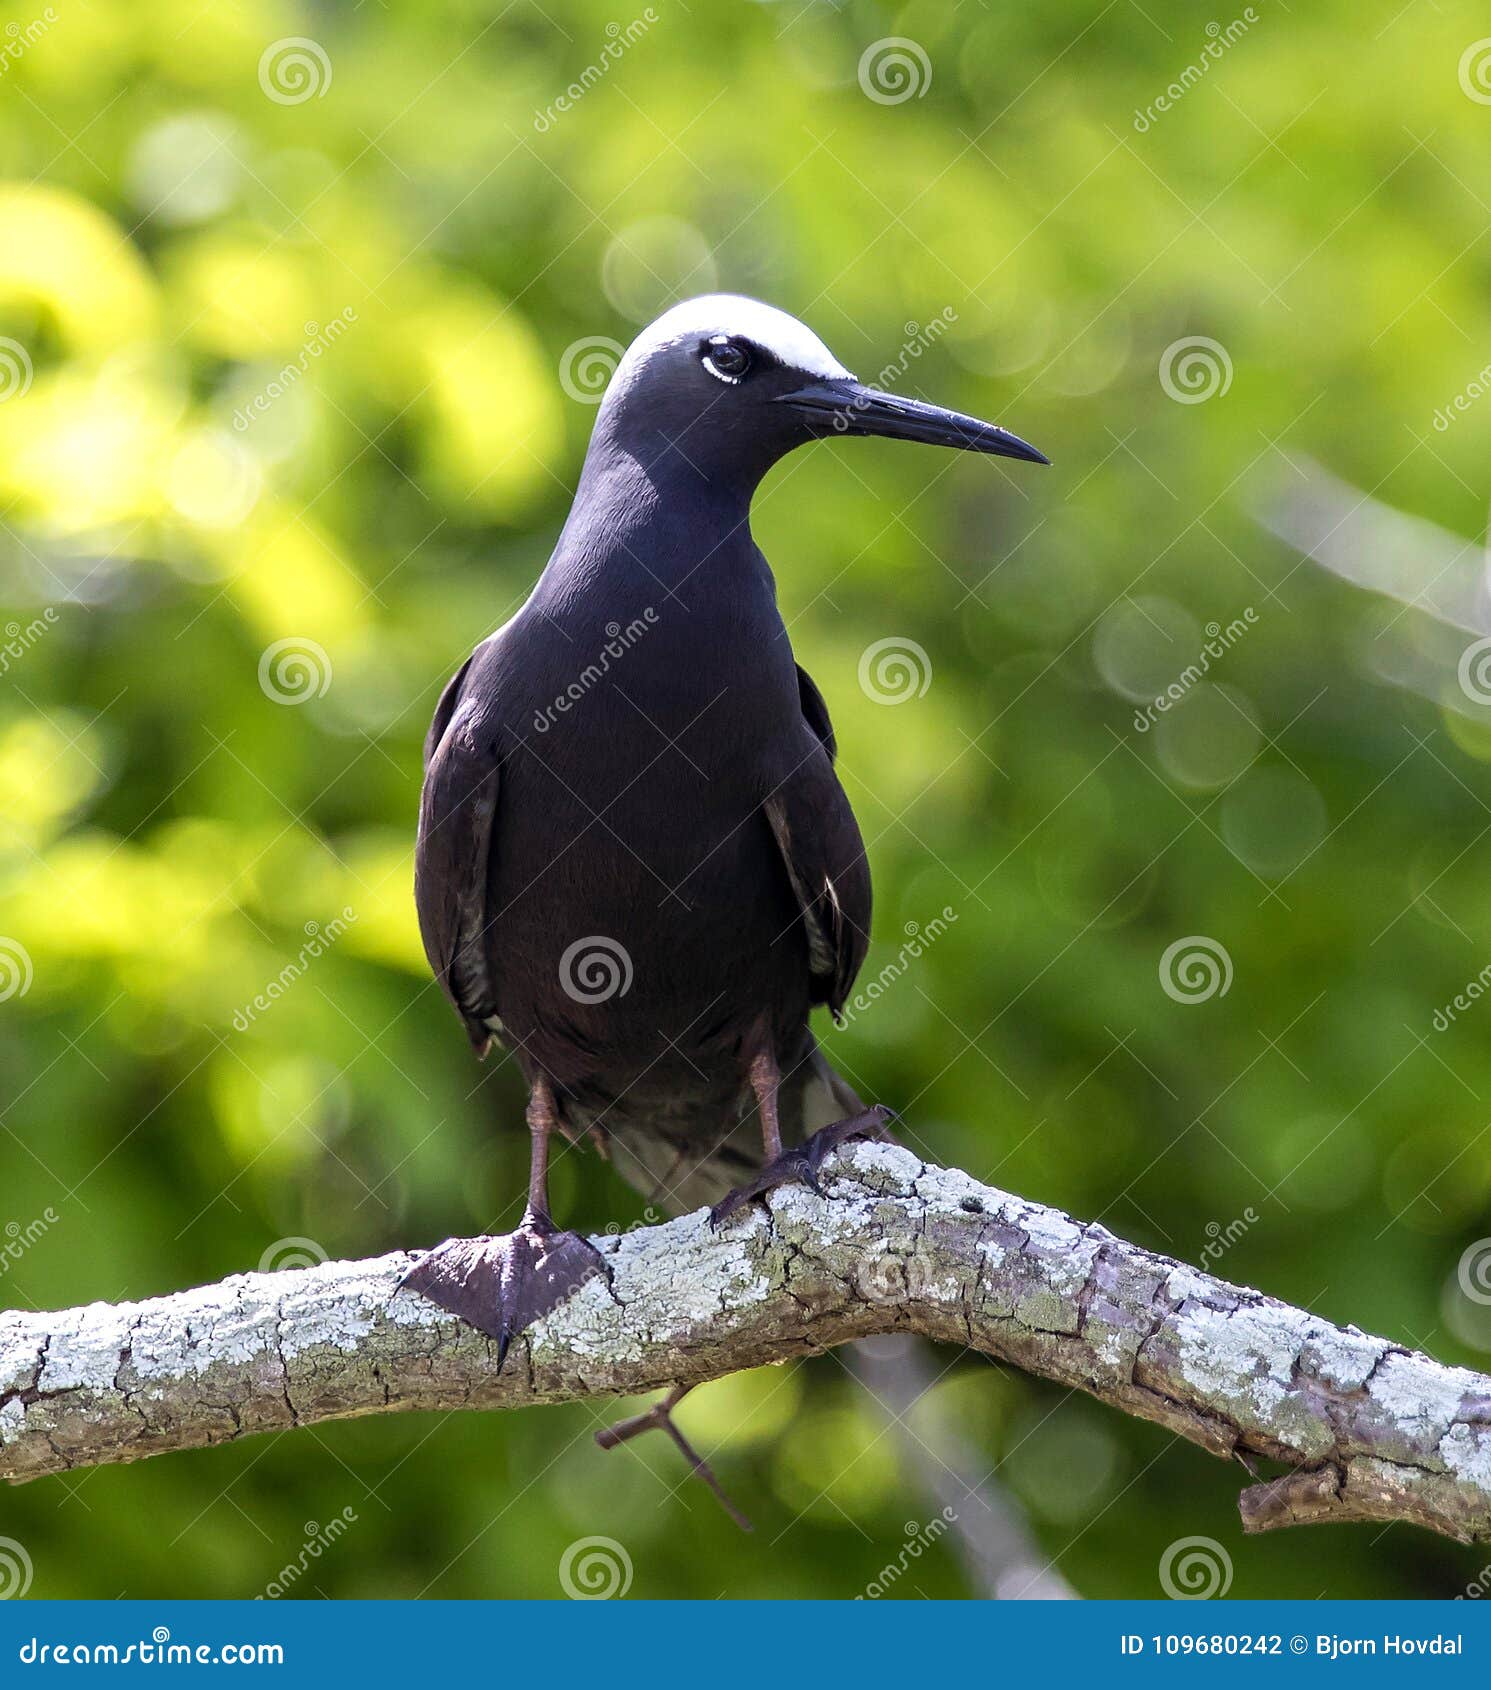 black noddy bird